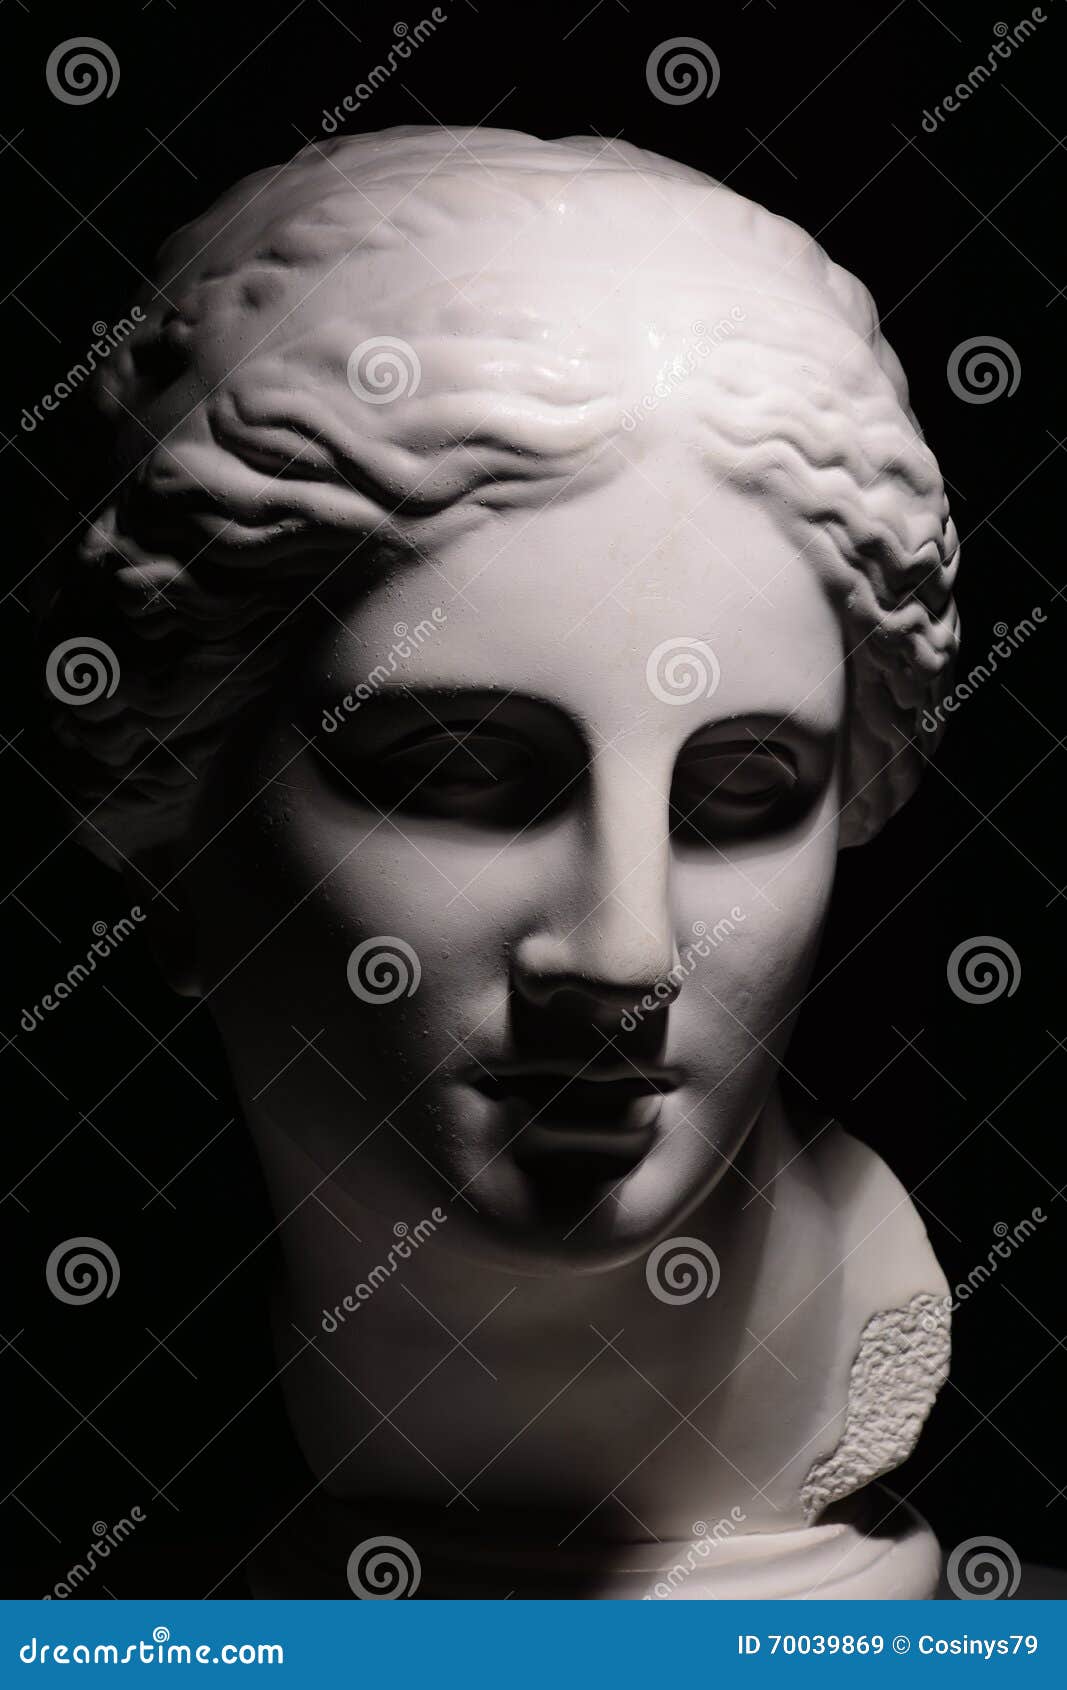 https://thumbs.dreamstime.com/z/classical-roman-bust-woman-sculpture-female-70039869.jpg